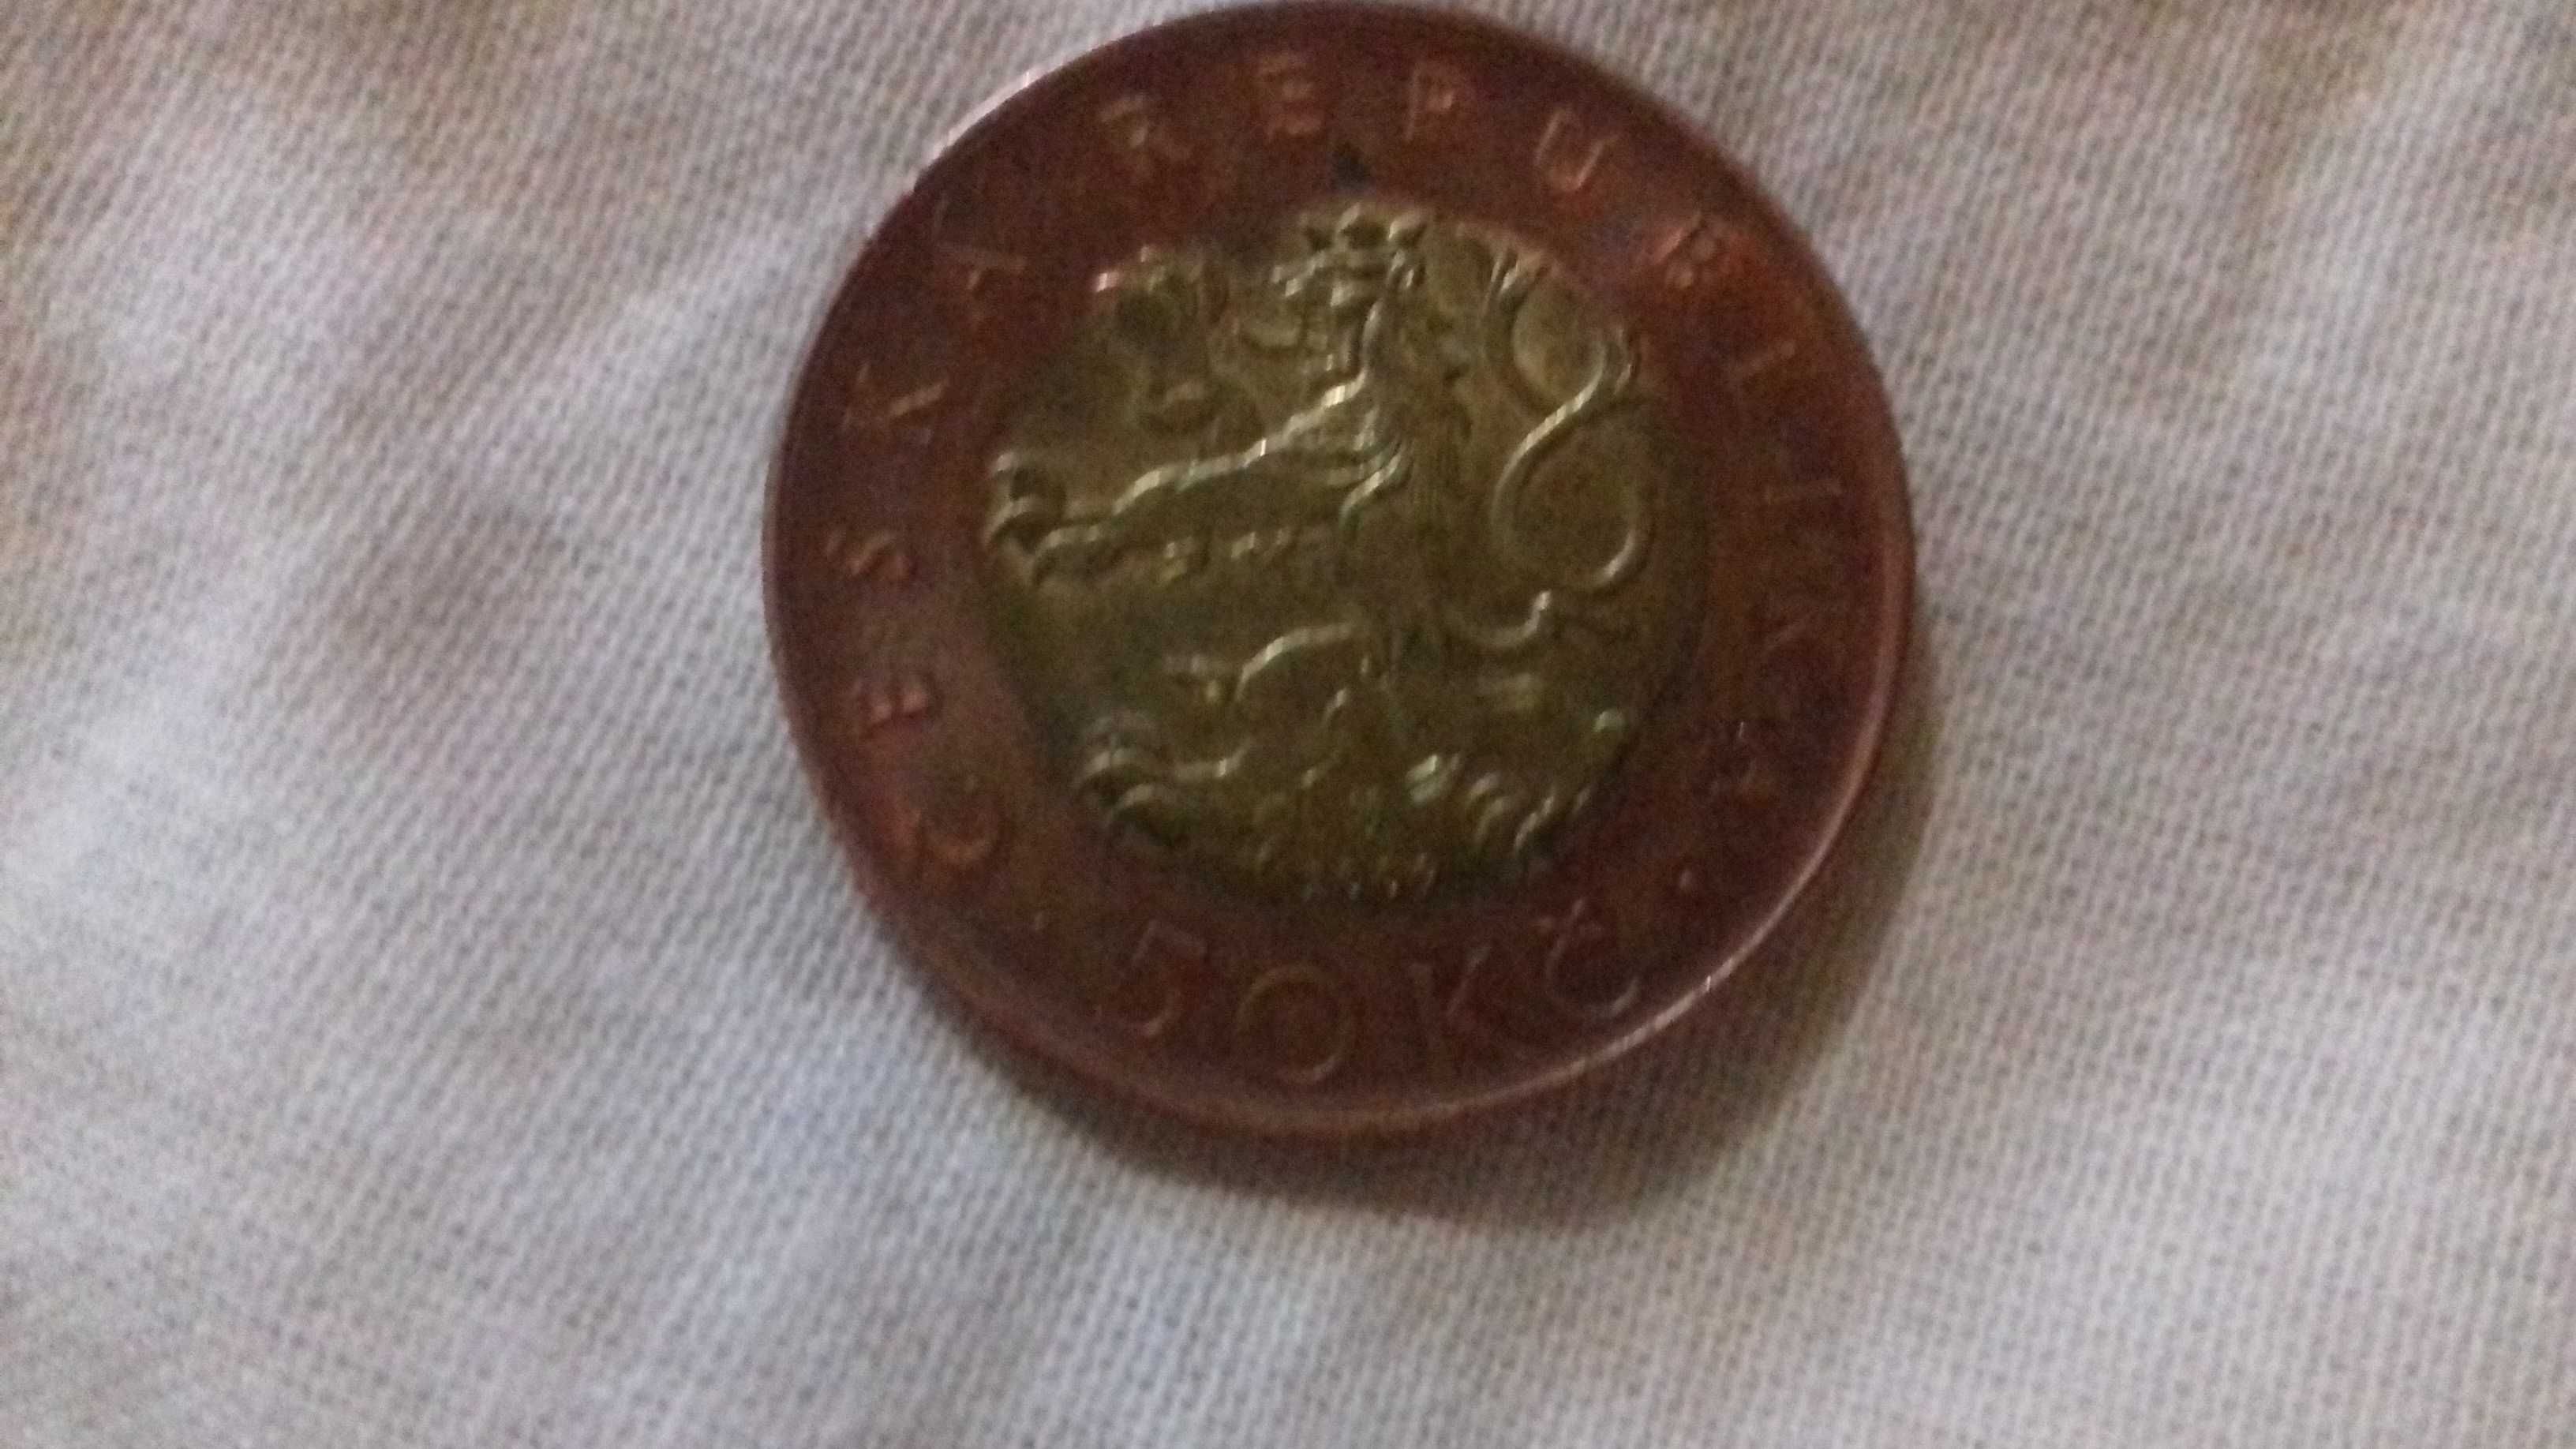 Moneta 50 koron czeskich 2009 r.